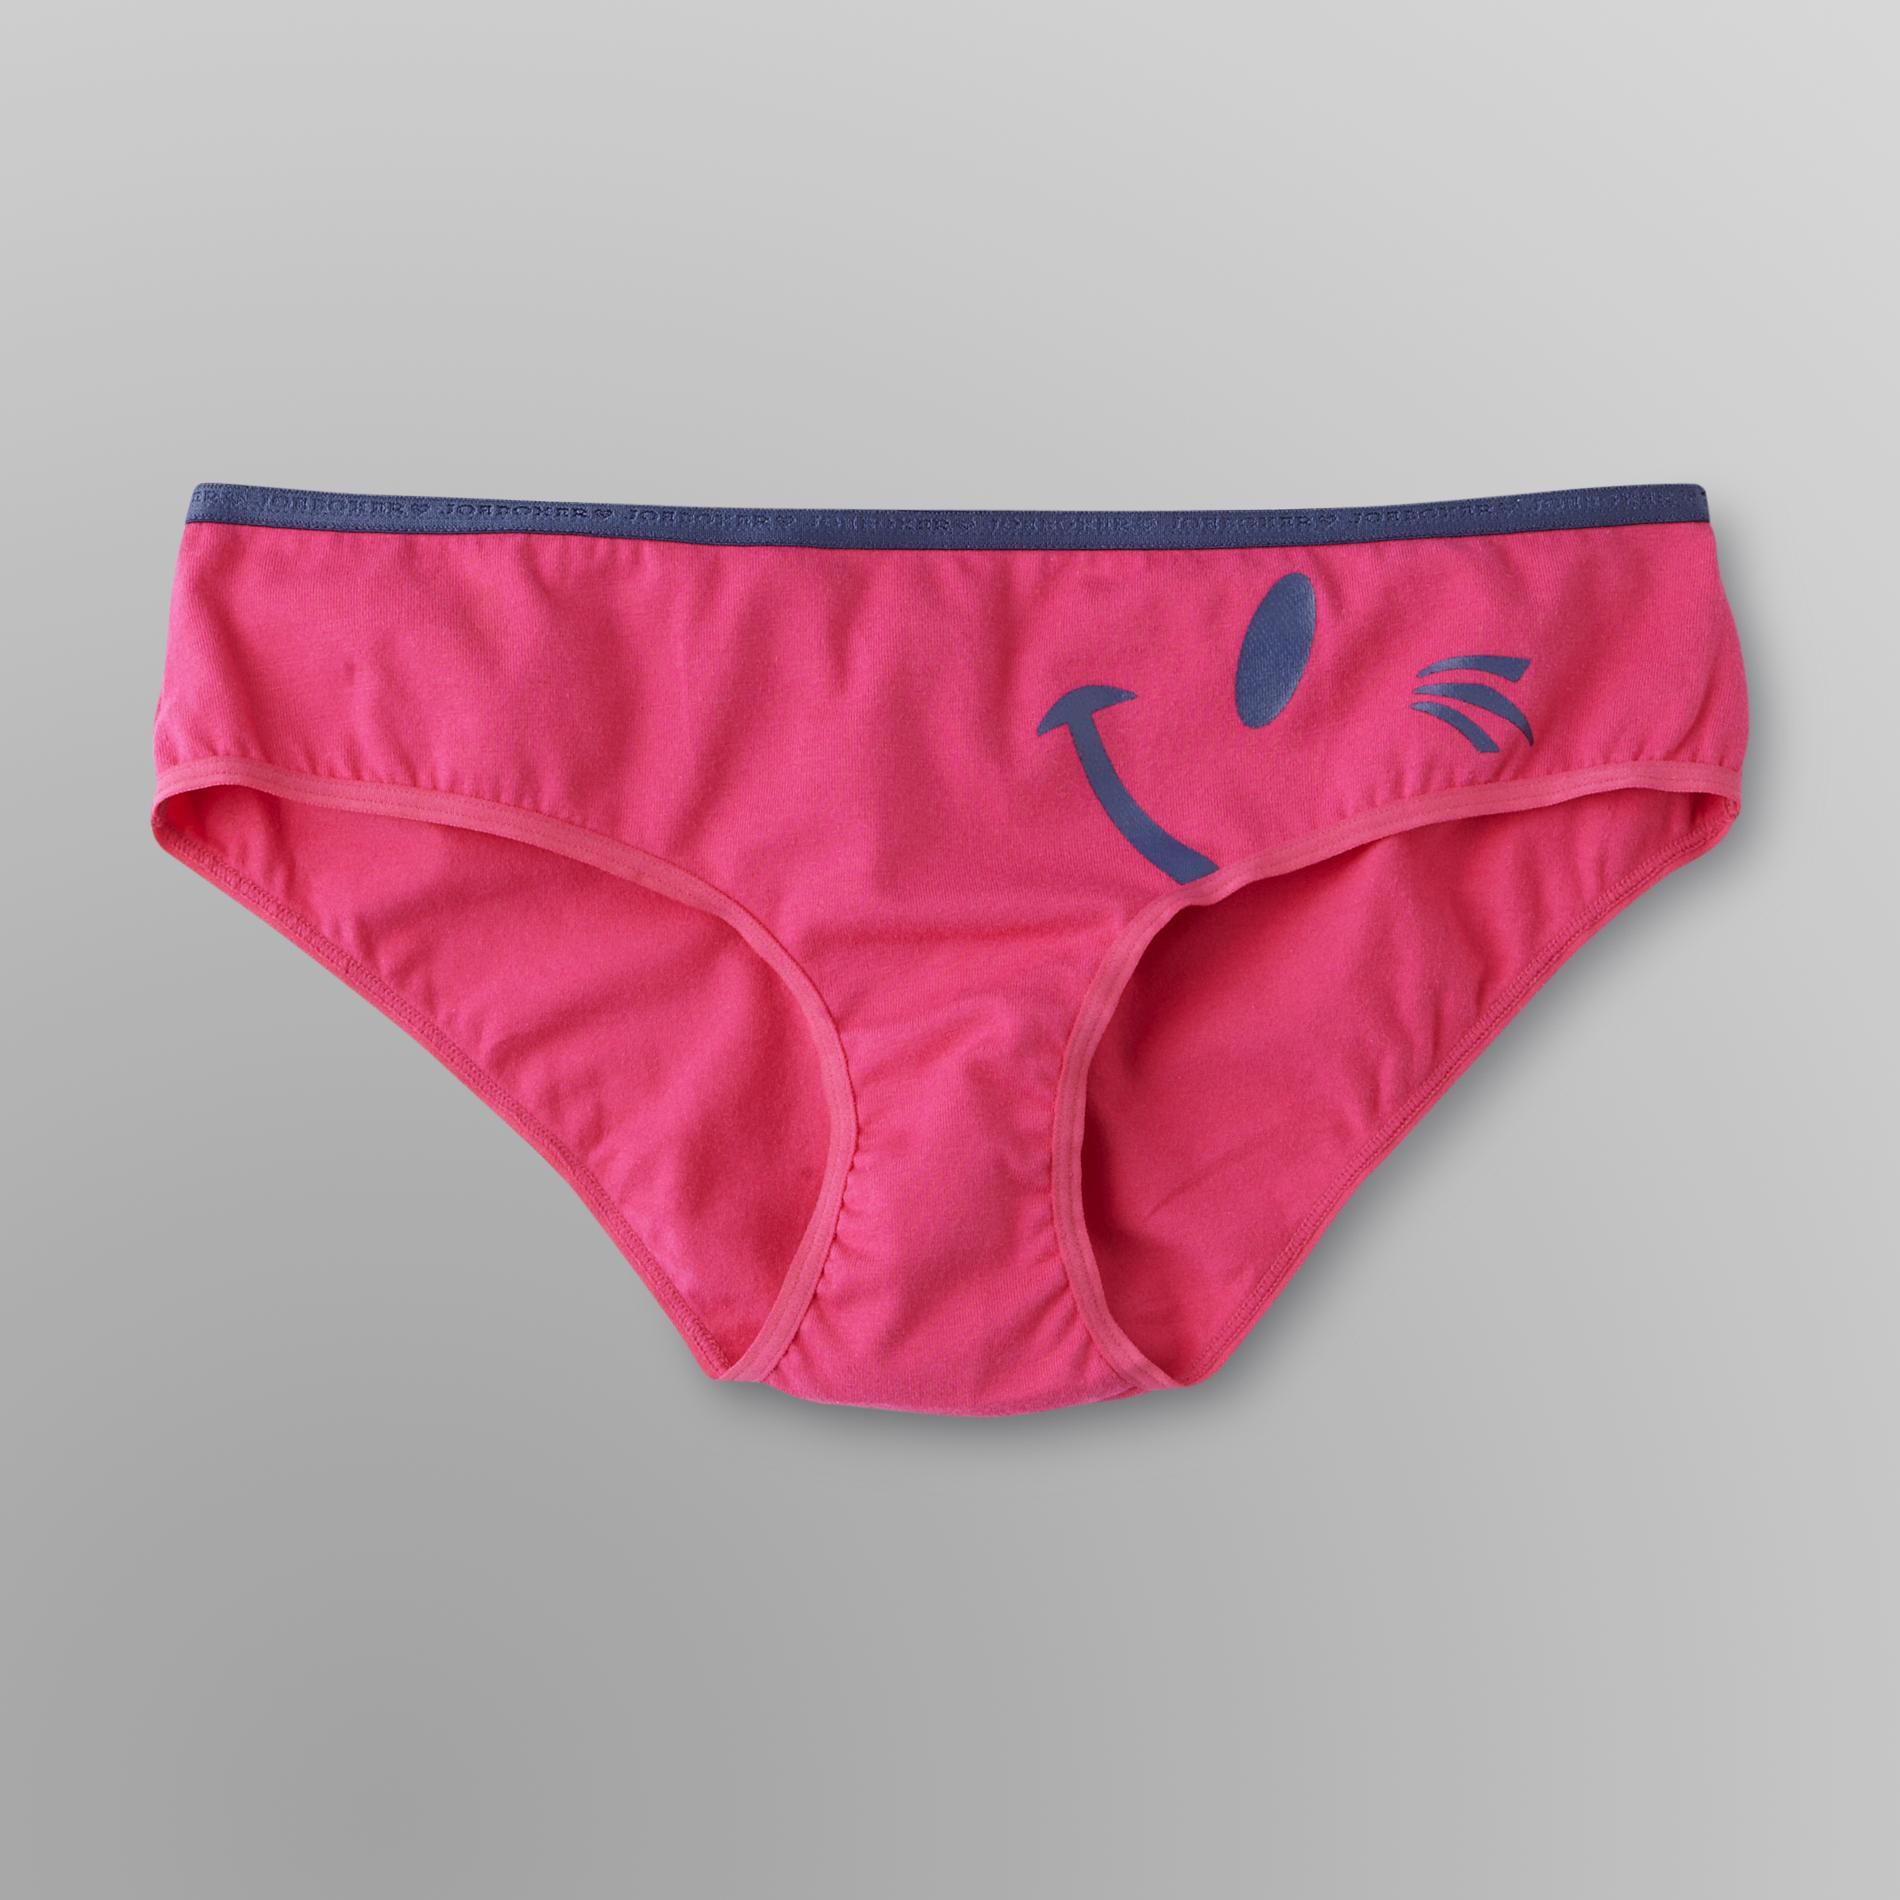 Joe Boxer Women's Panties